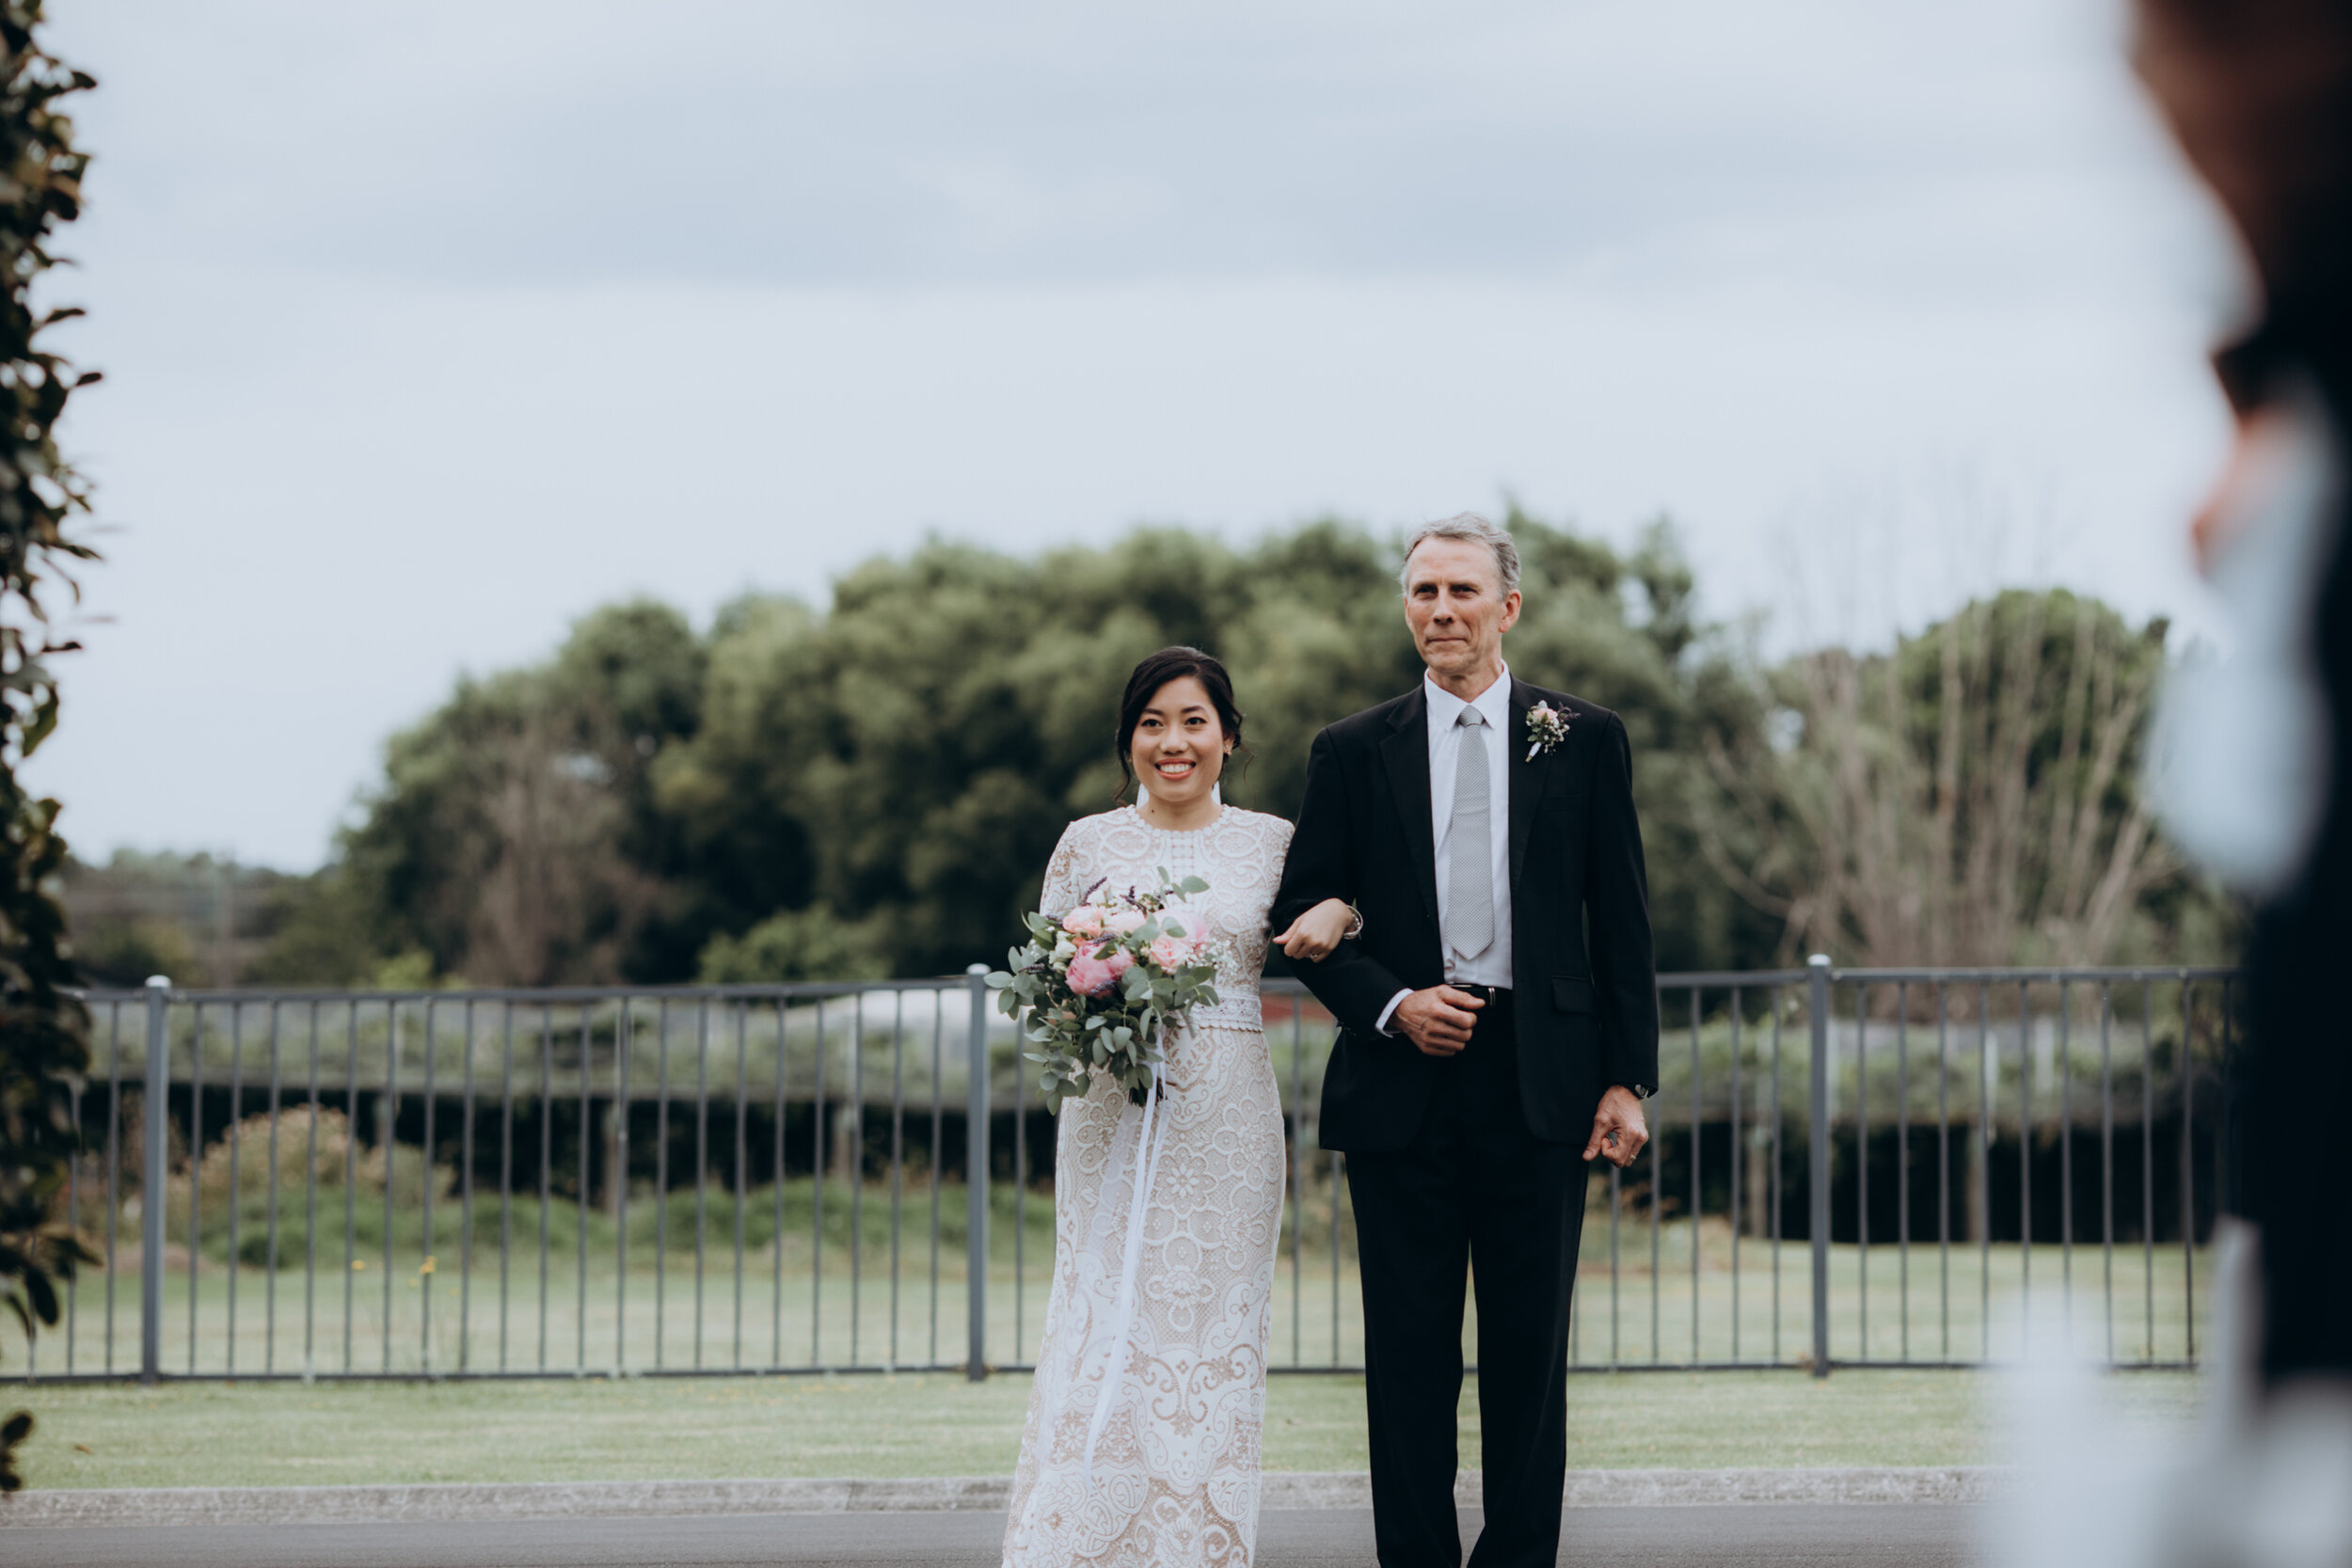 Allely Estate Auckland wedding photographer 27.jpg